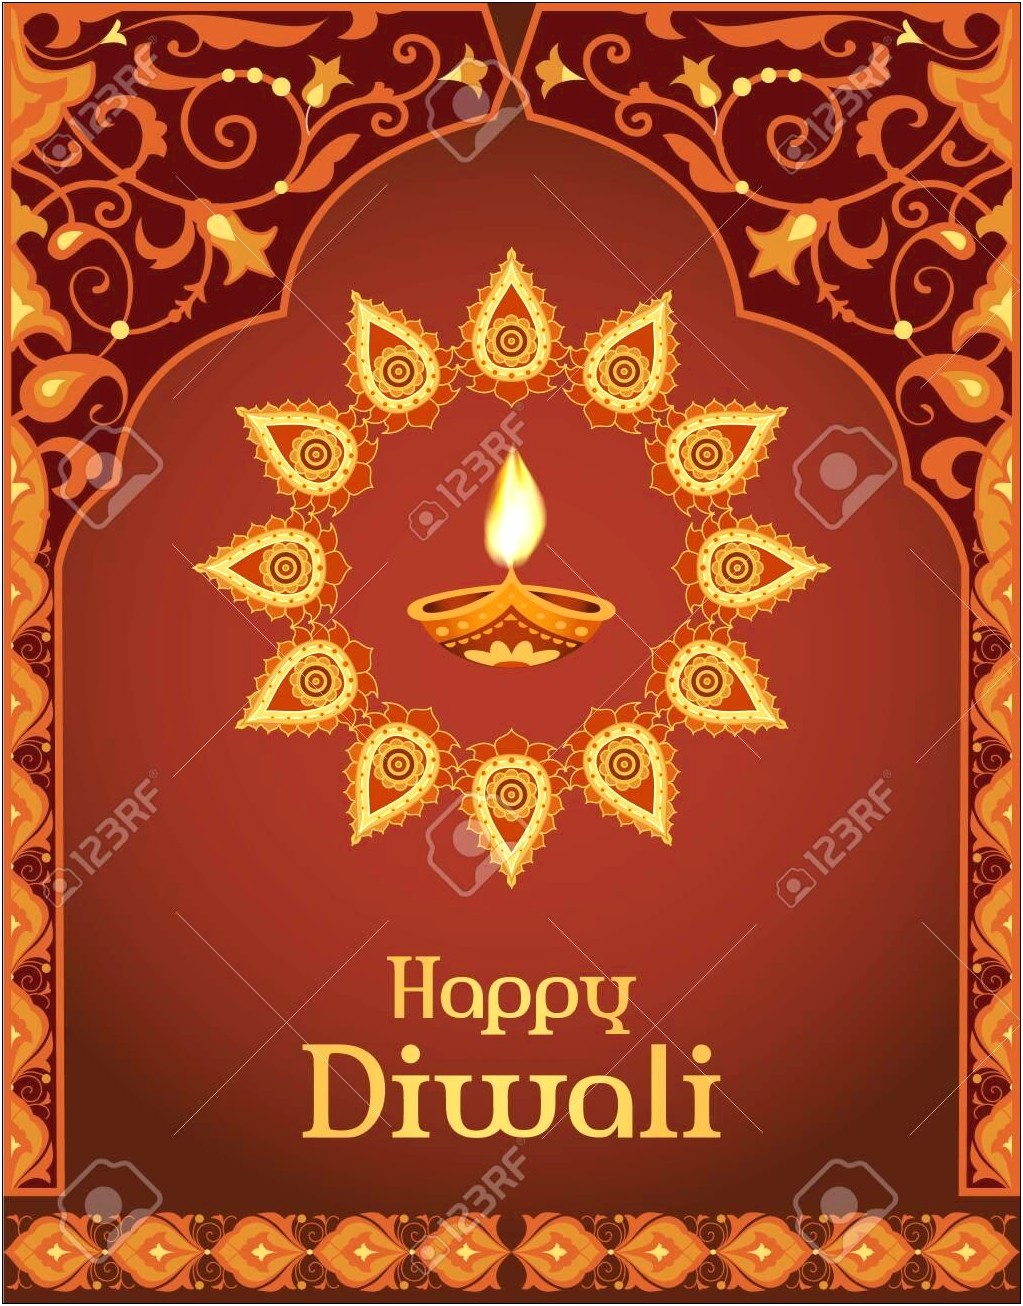 Happy Diwali Greeting Card Template Free